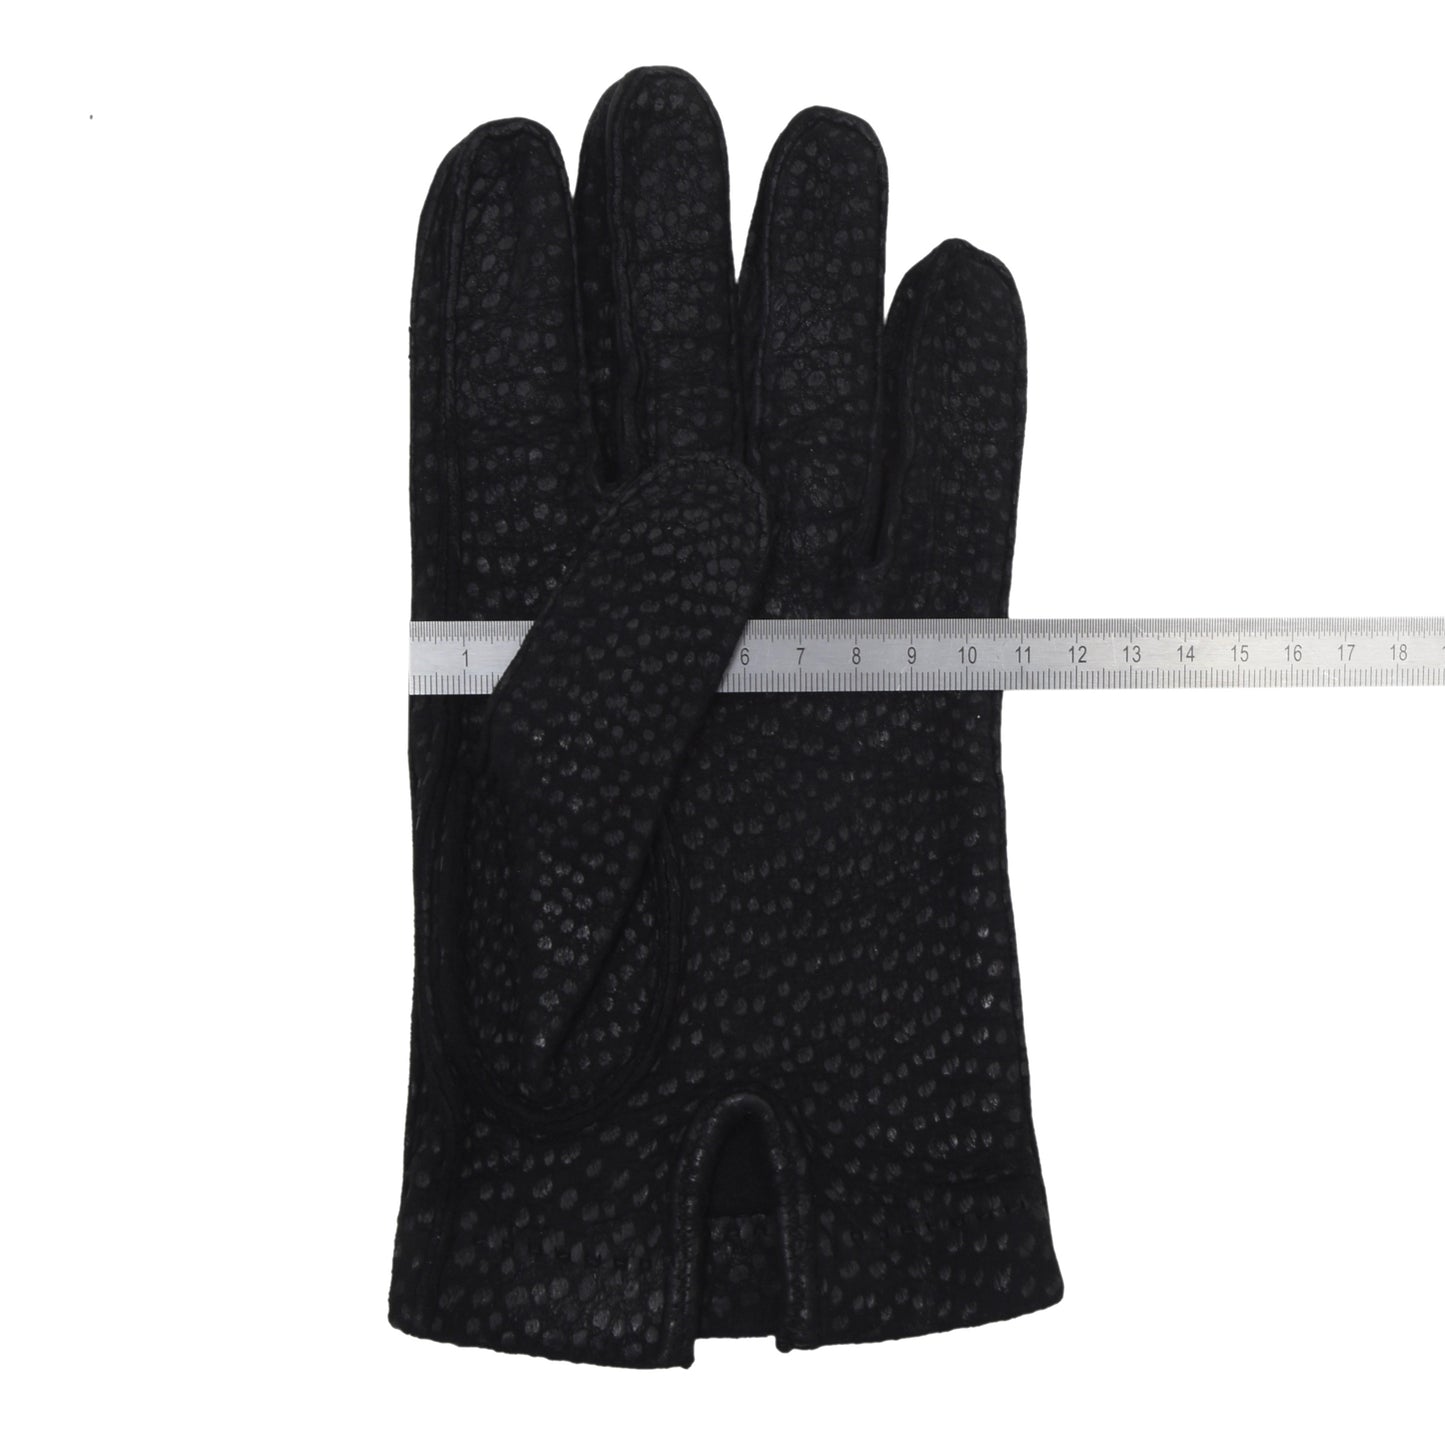 Unlined Carpincho Gloves - Black